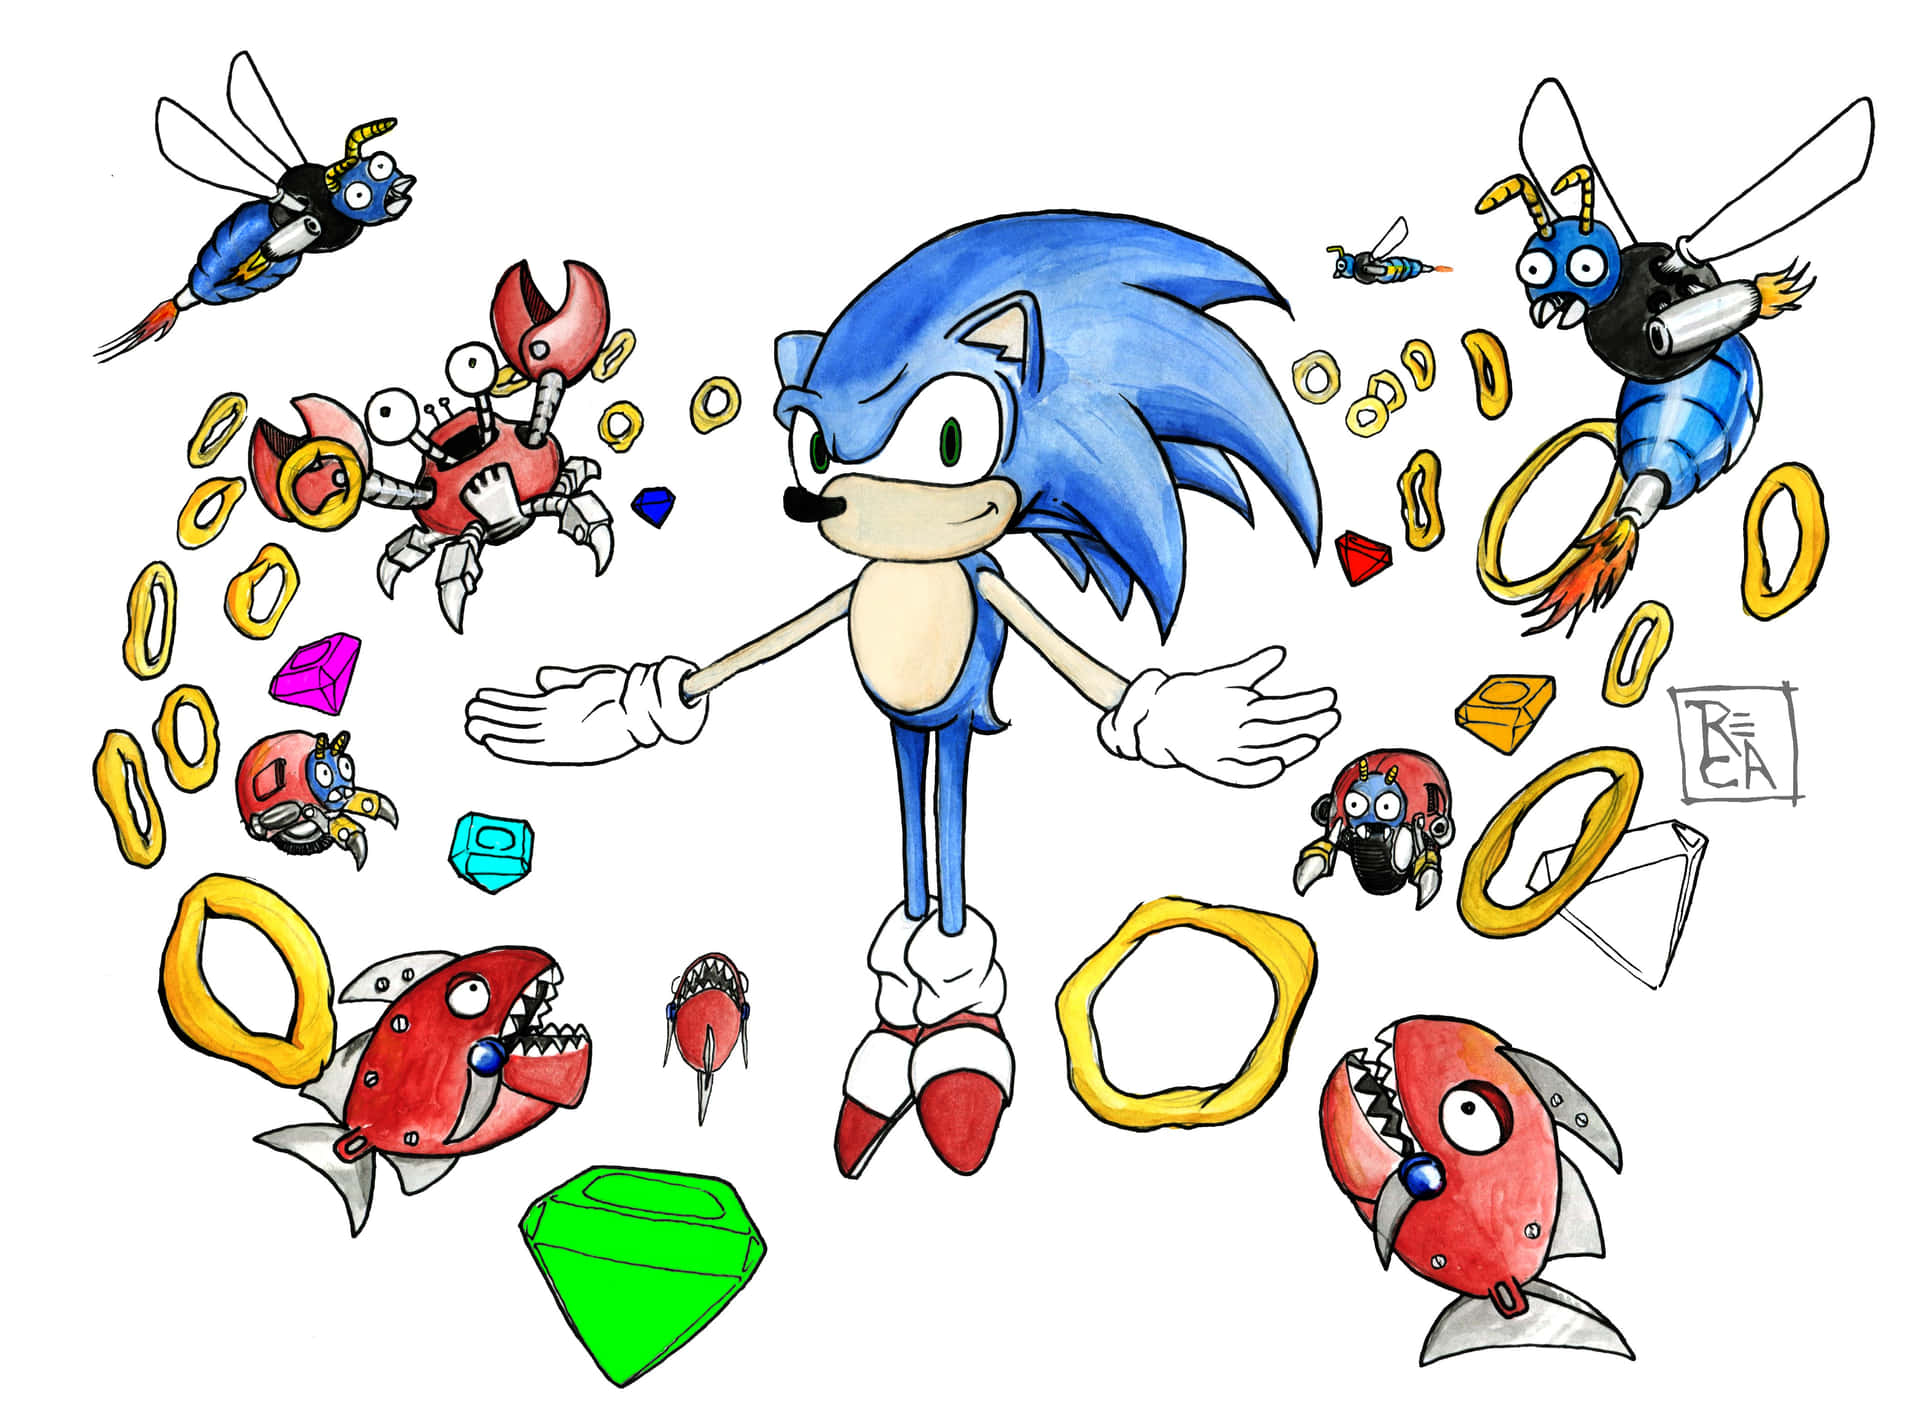 Sonic the Hedgehog: A Dynamic Adventure Wallpaper